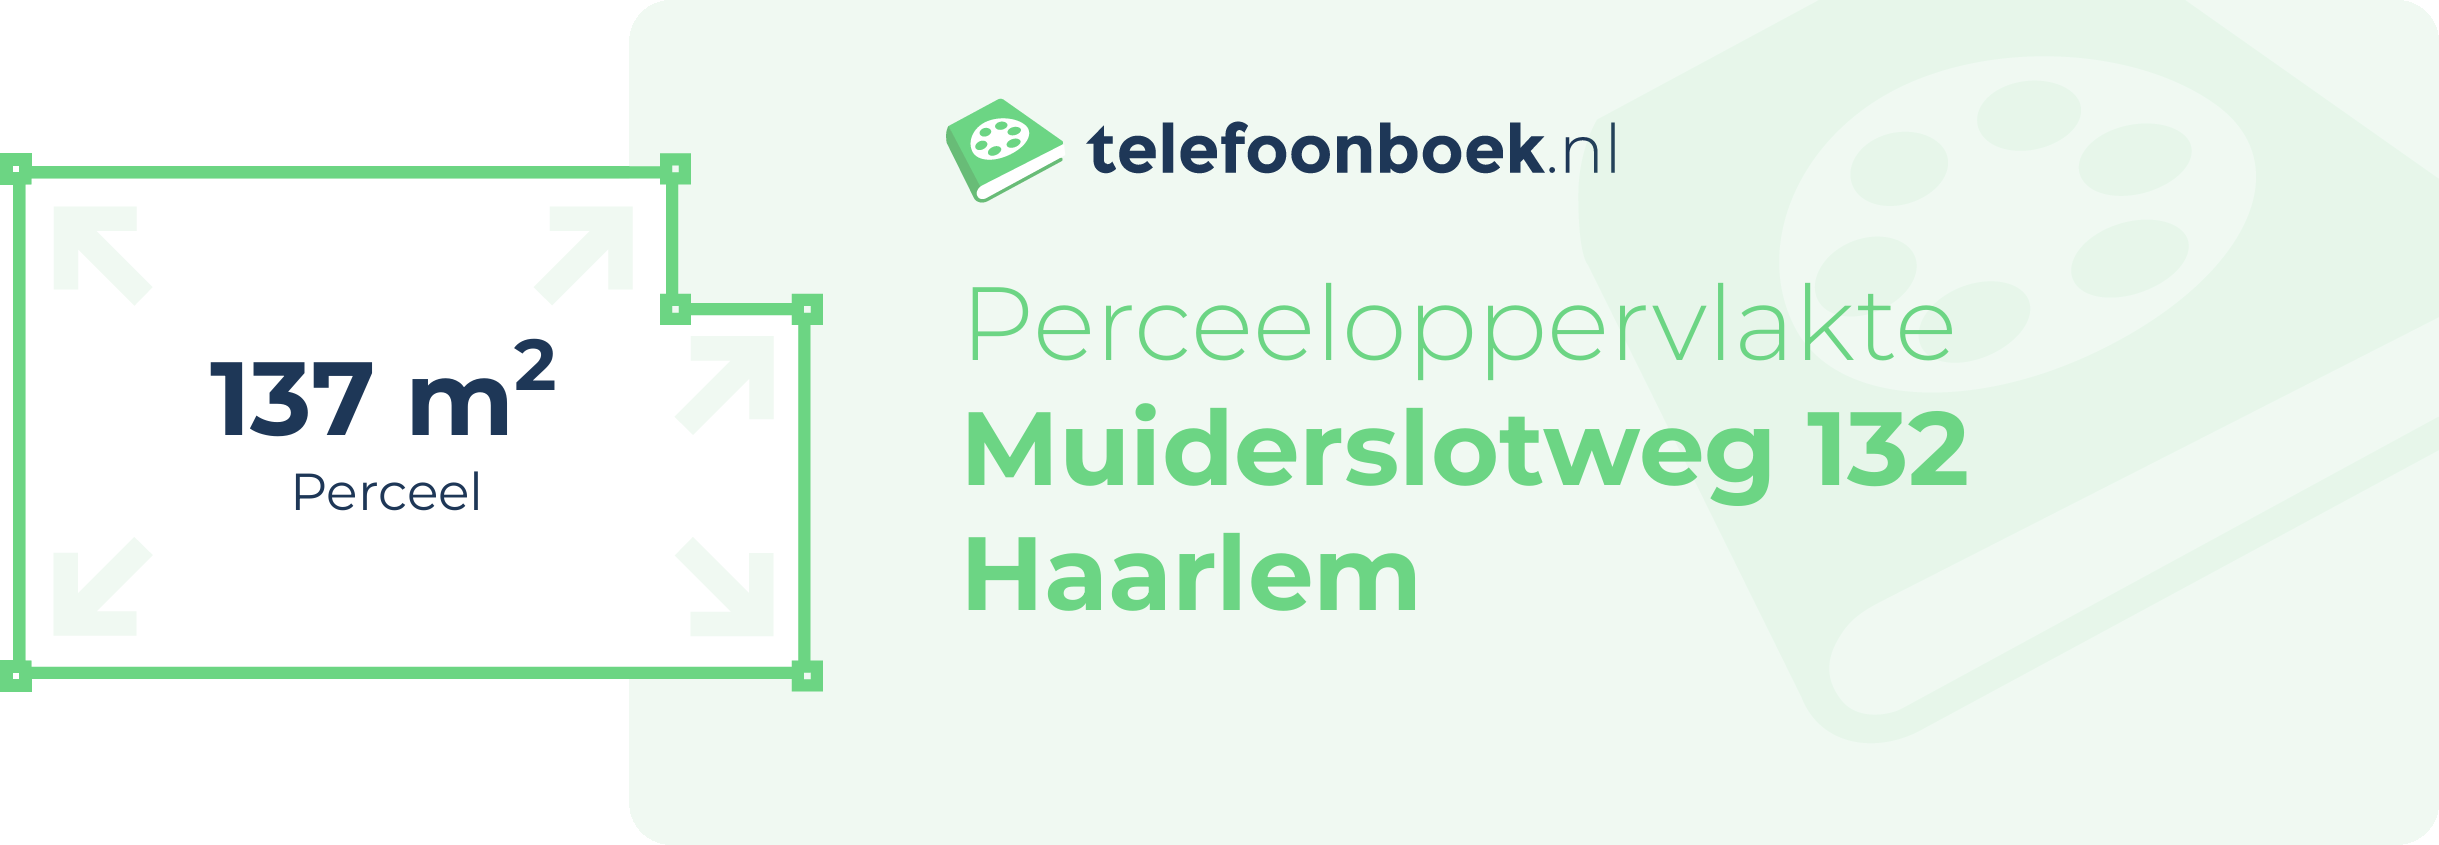 Perceeloppervlakte Muiderslotweg 132 Haarlem